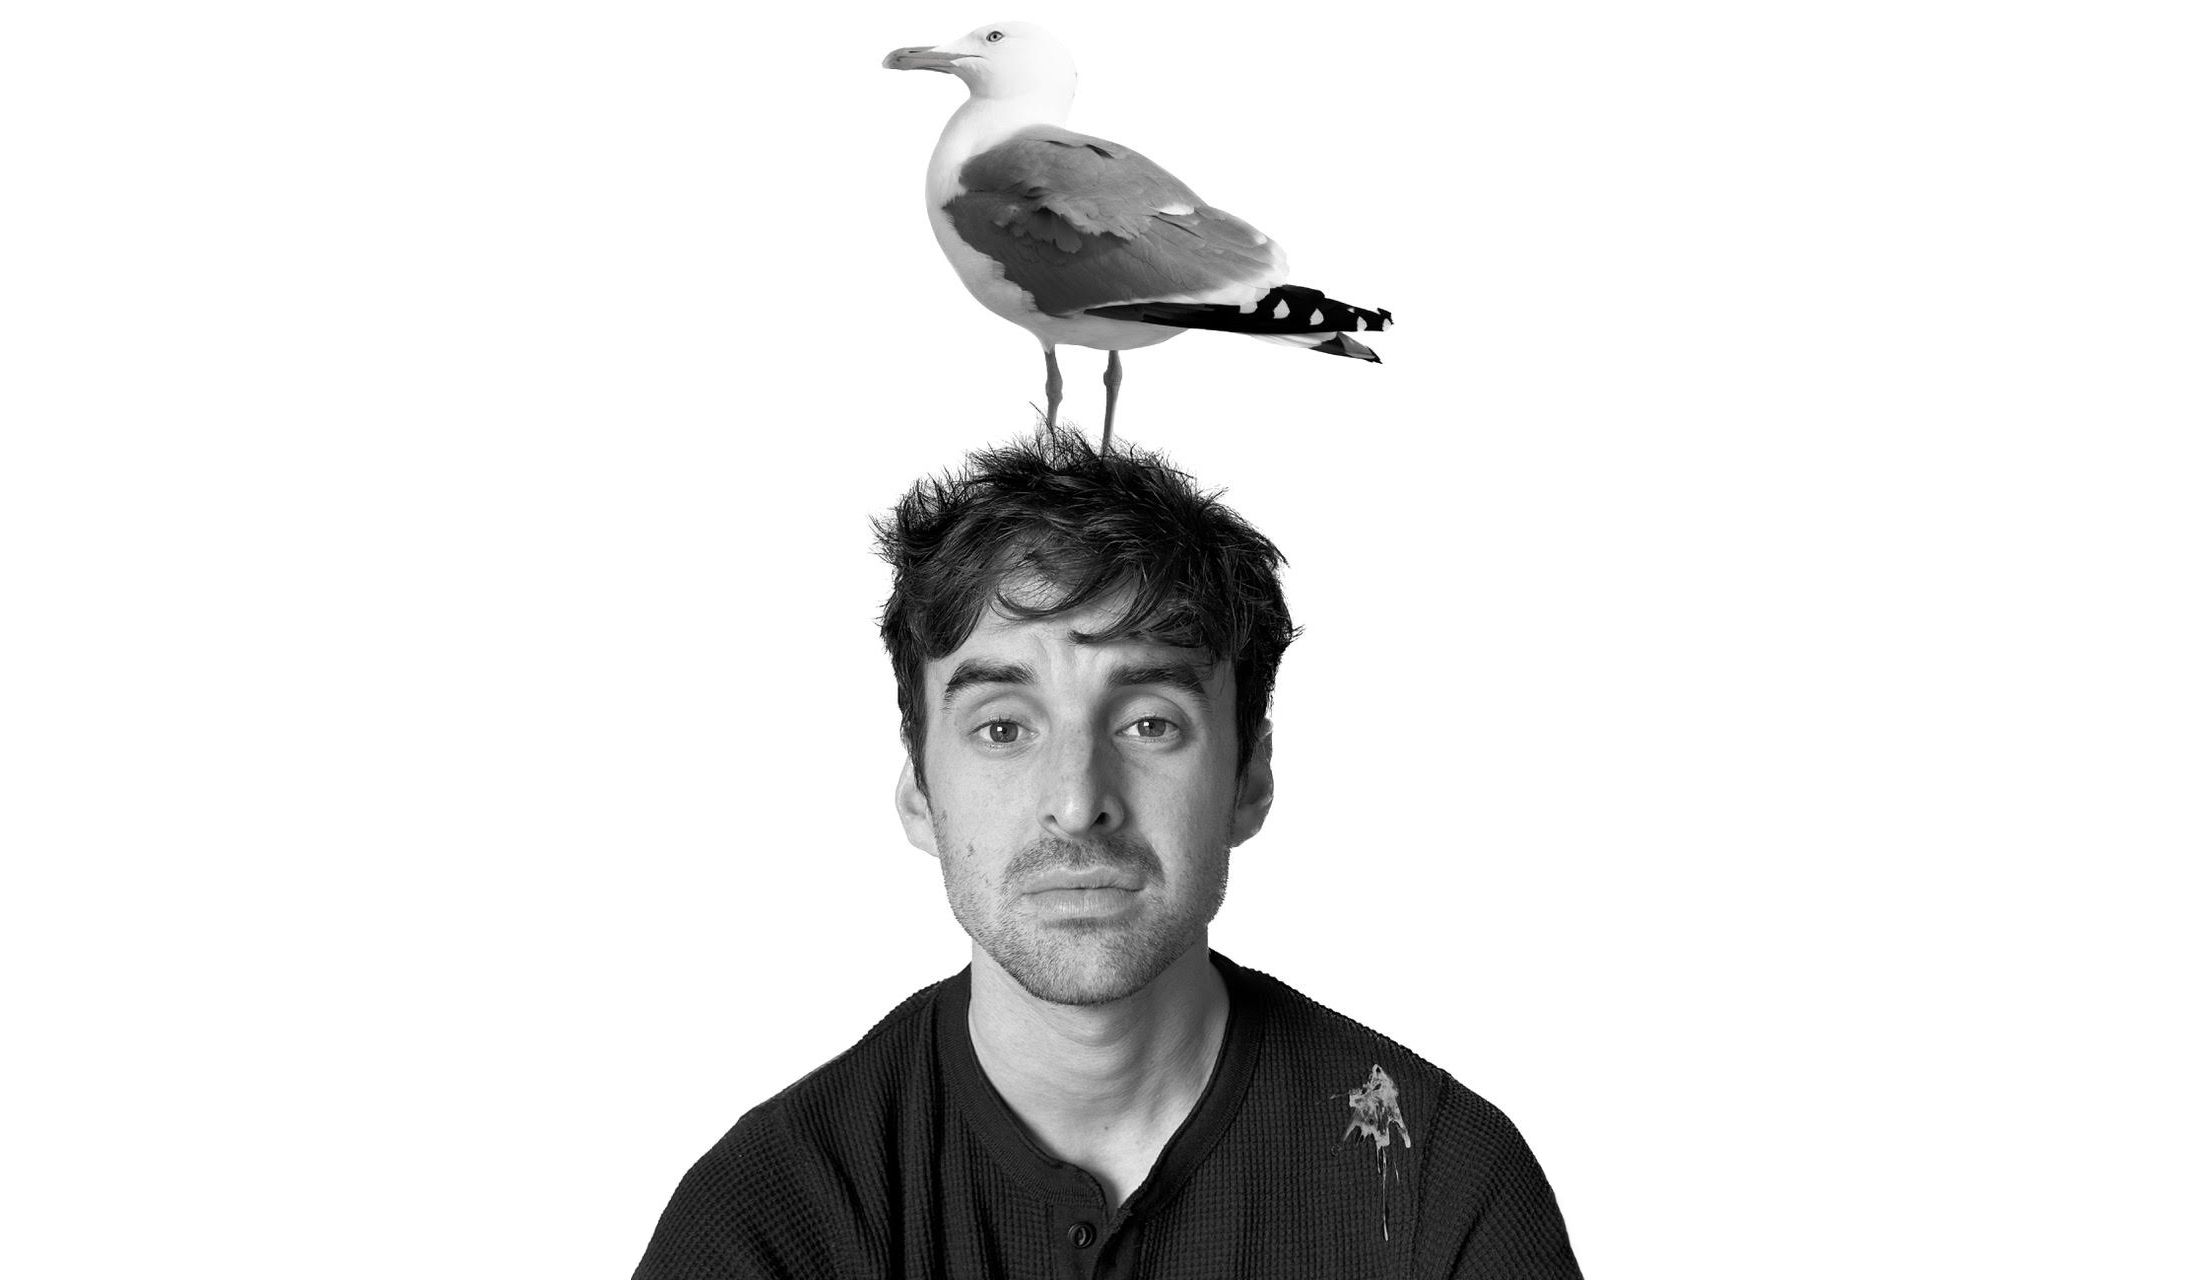 man with a bird on his head